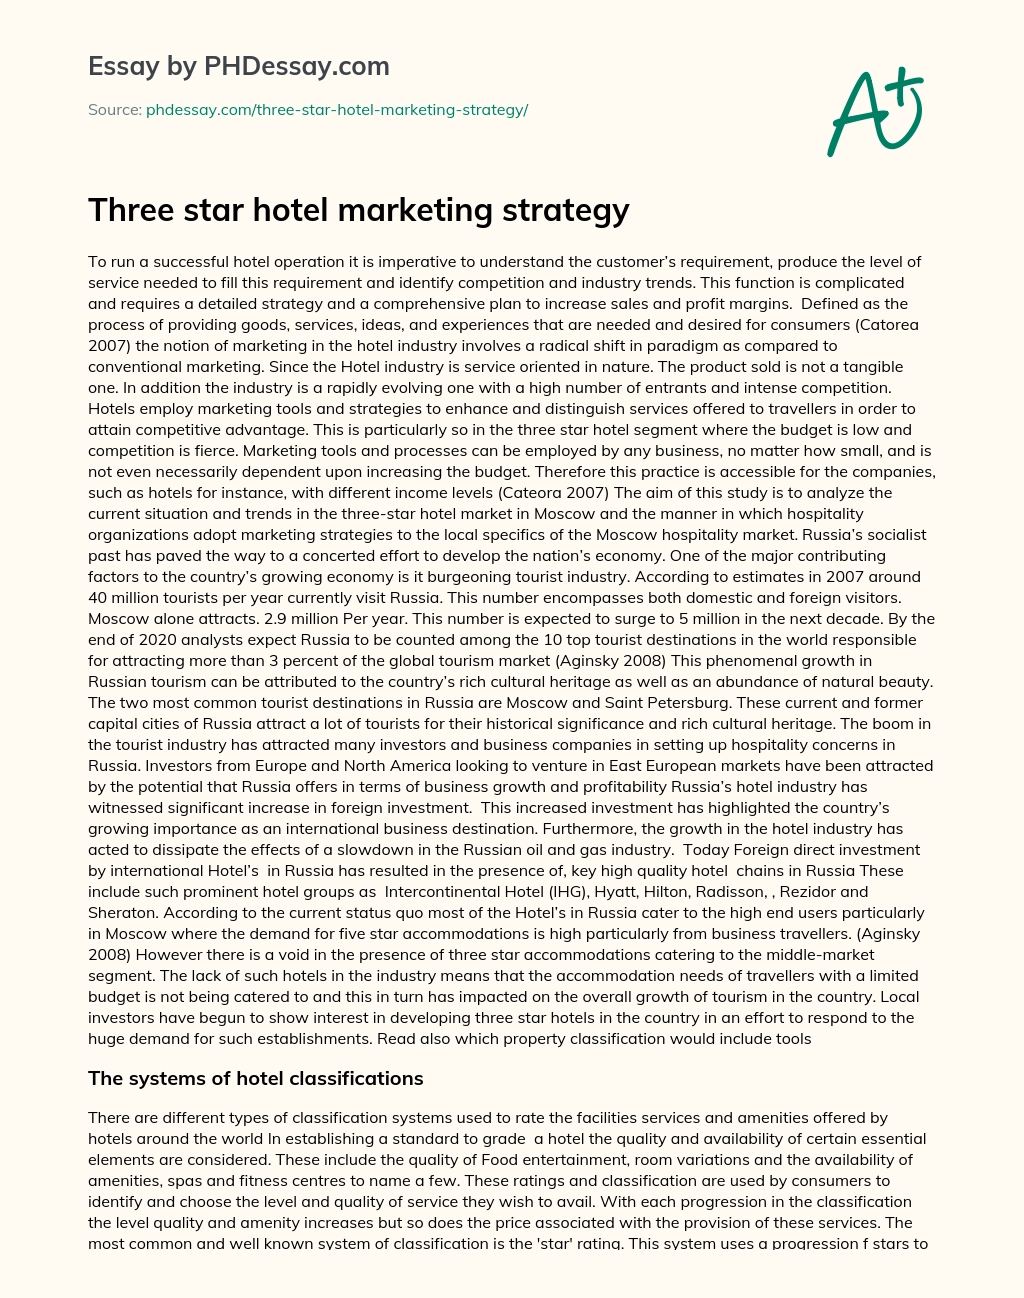 Three star hotel marketing strategy essay